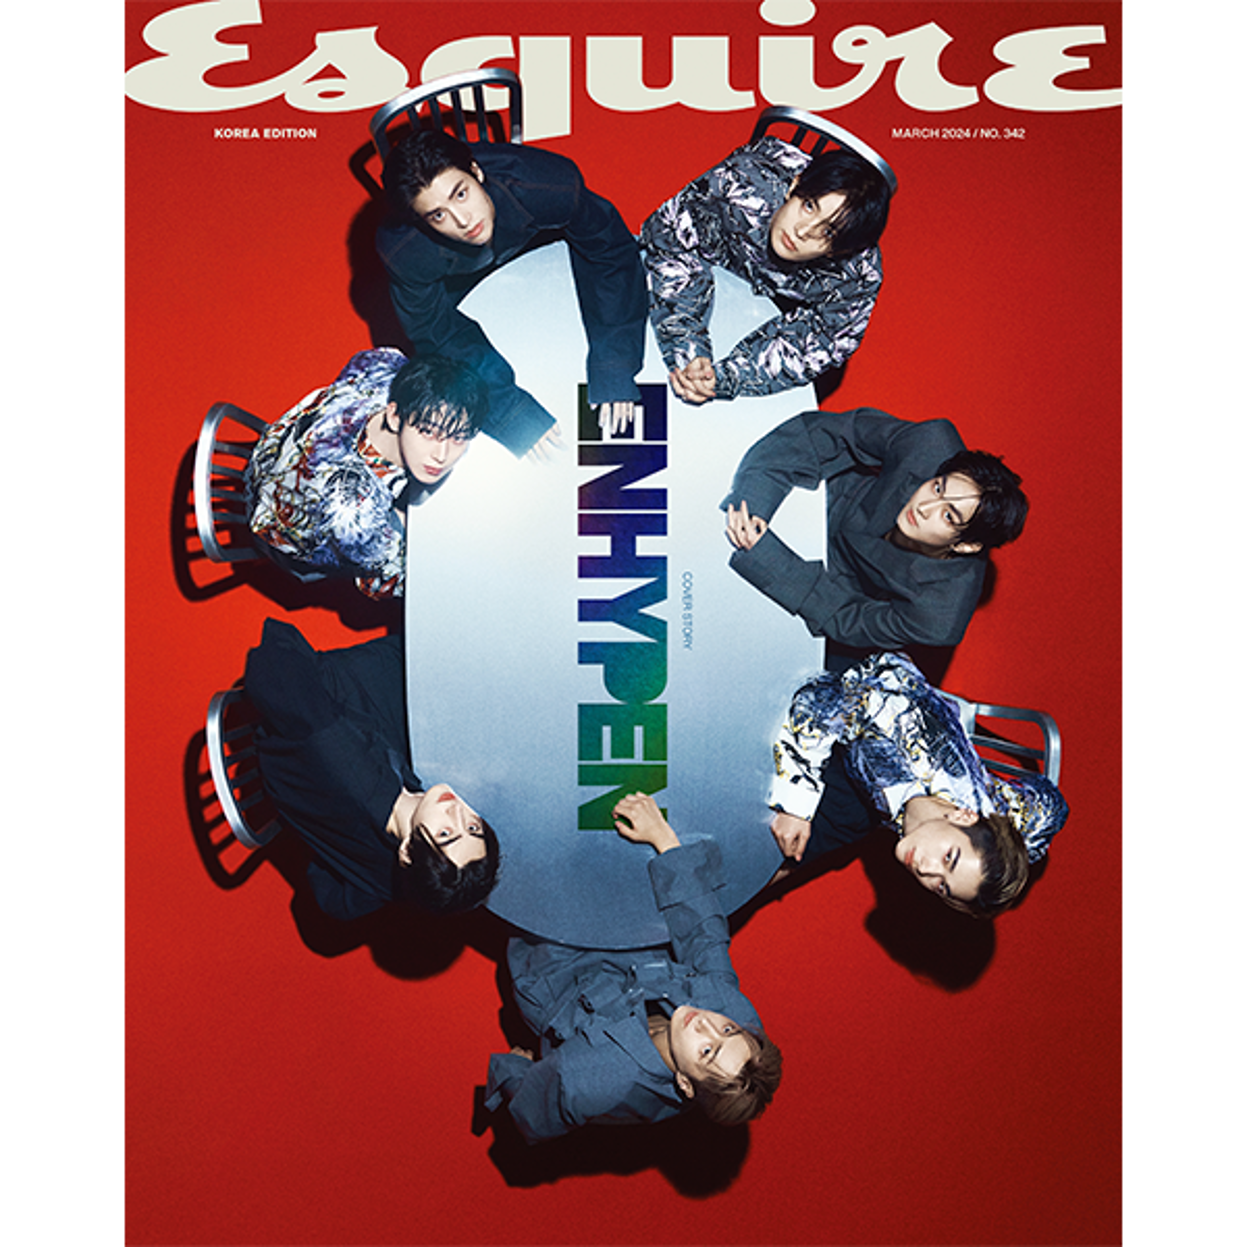 ESQUIRE Esquire: March Type A (cover: ENHYPEN / to: ENHYPEN 18p)